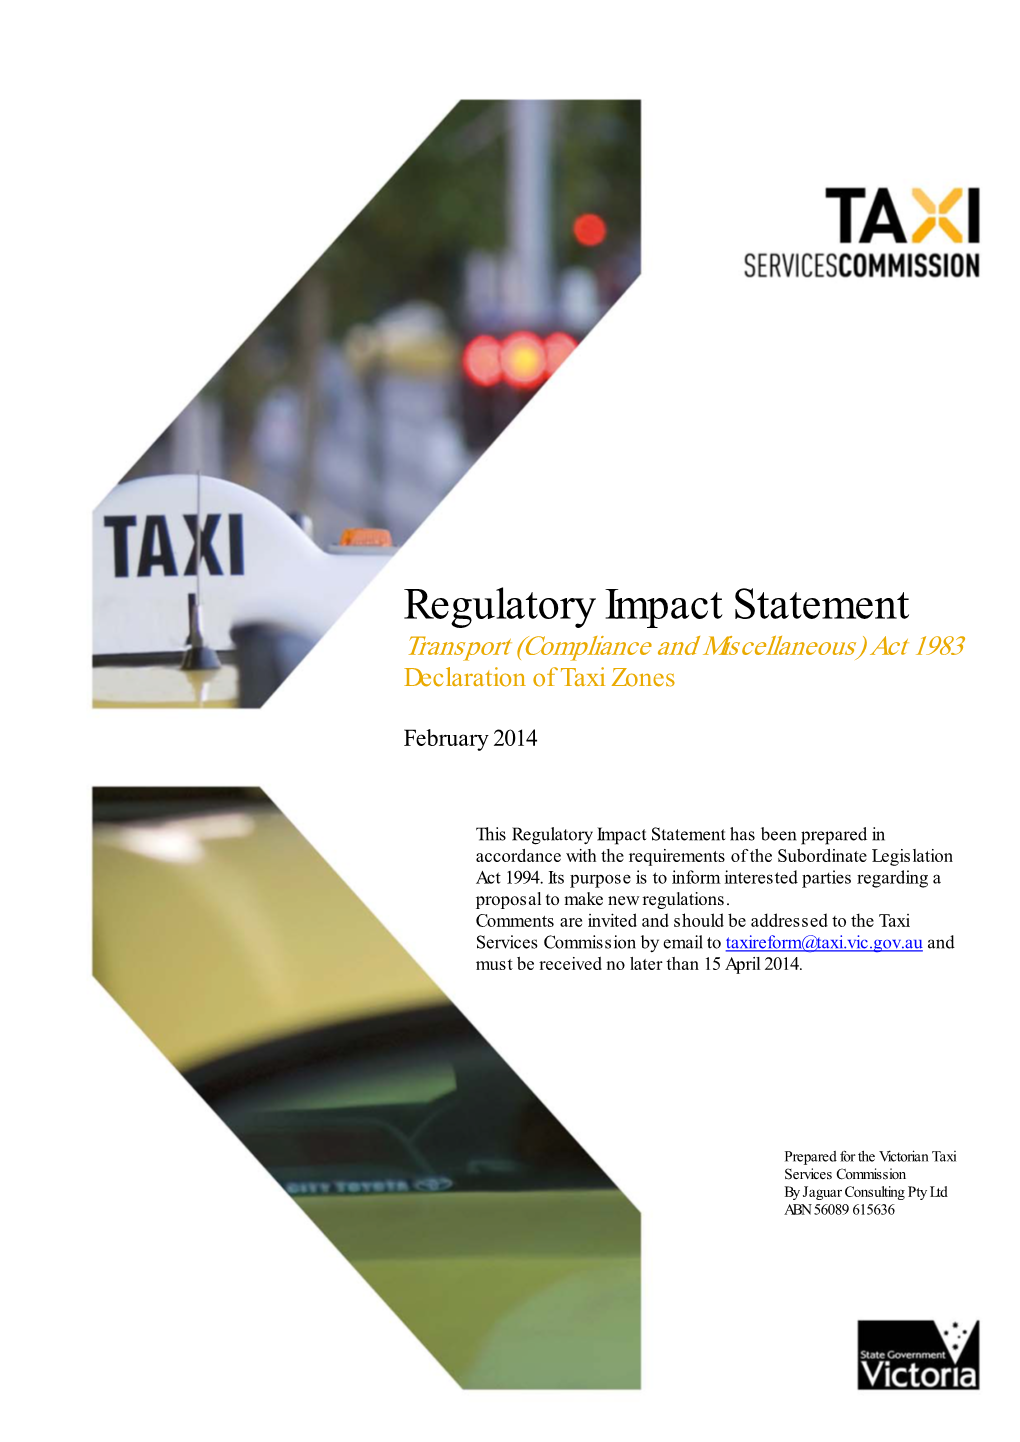 Declaration of Taxi Zones – Regulatory Impact Statement